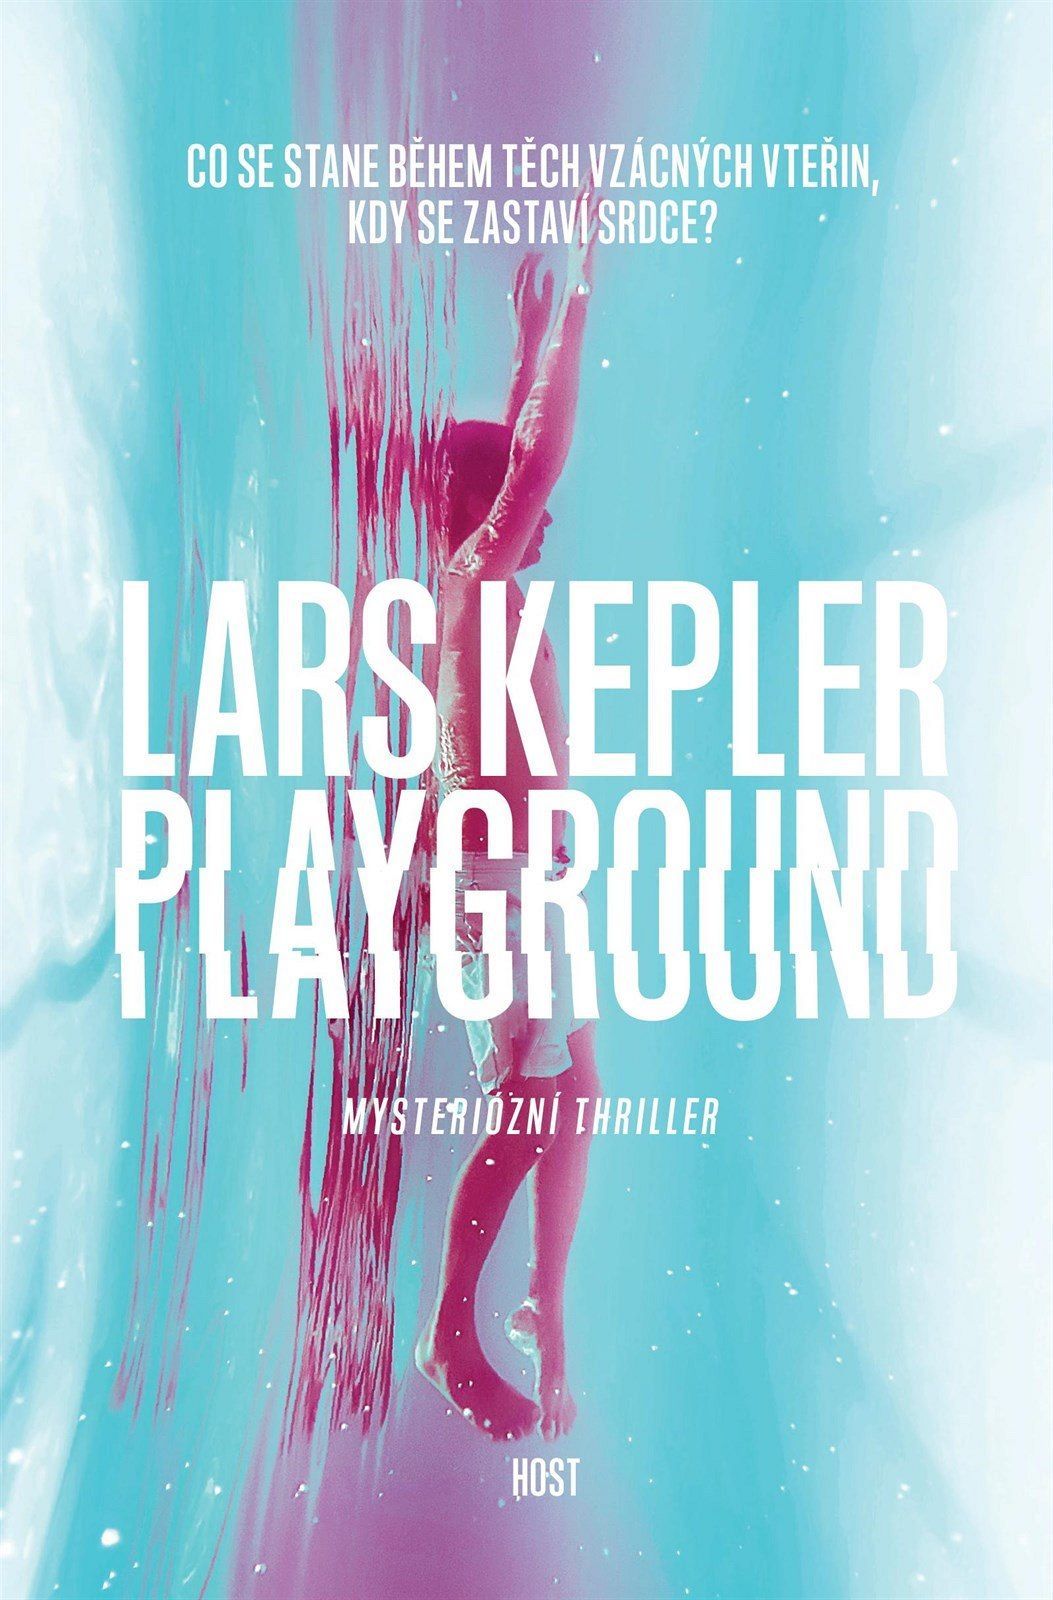 Lars Kepler: Playground